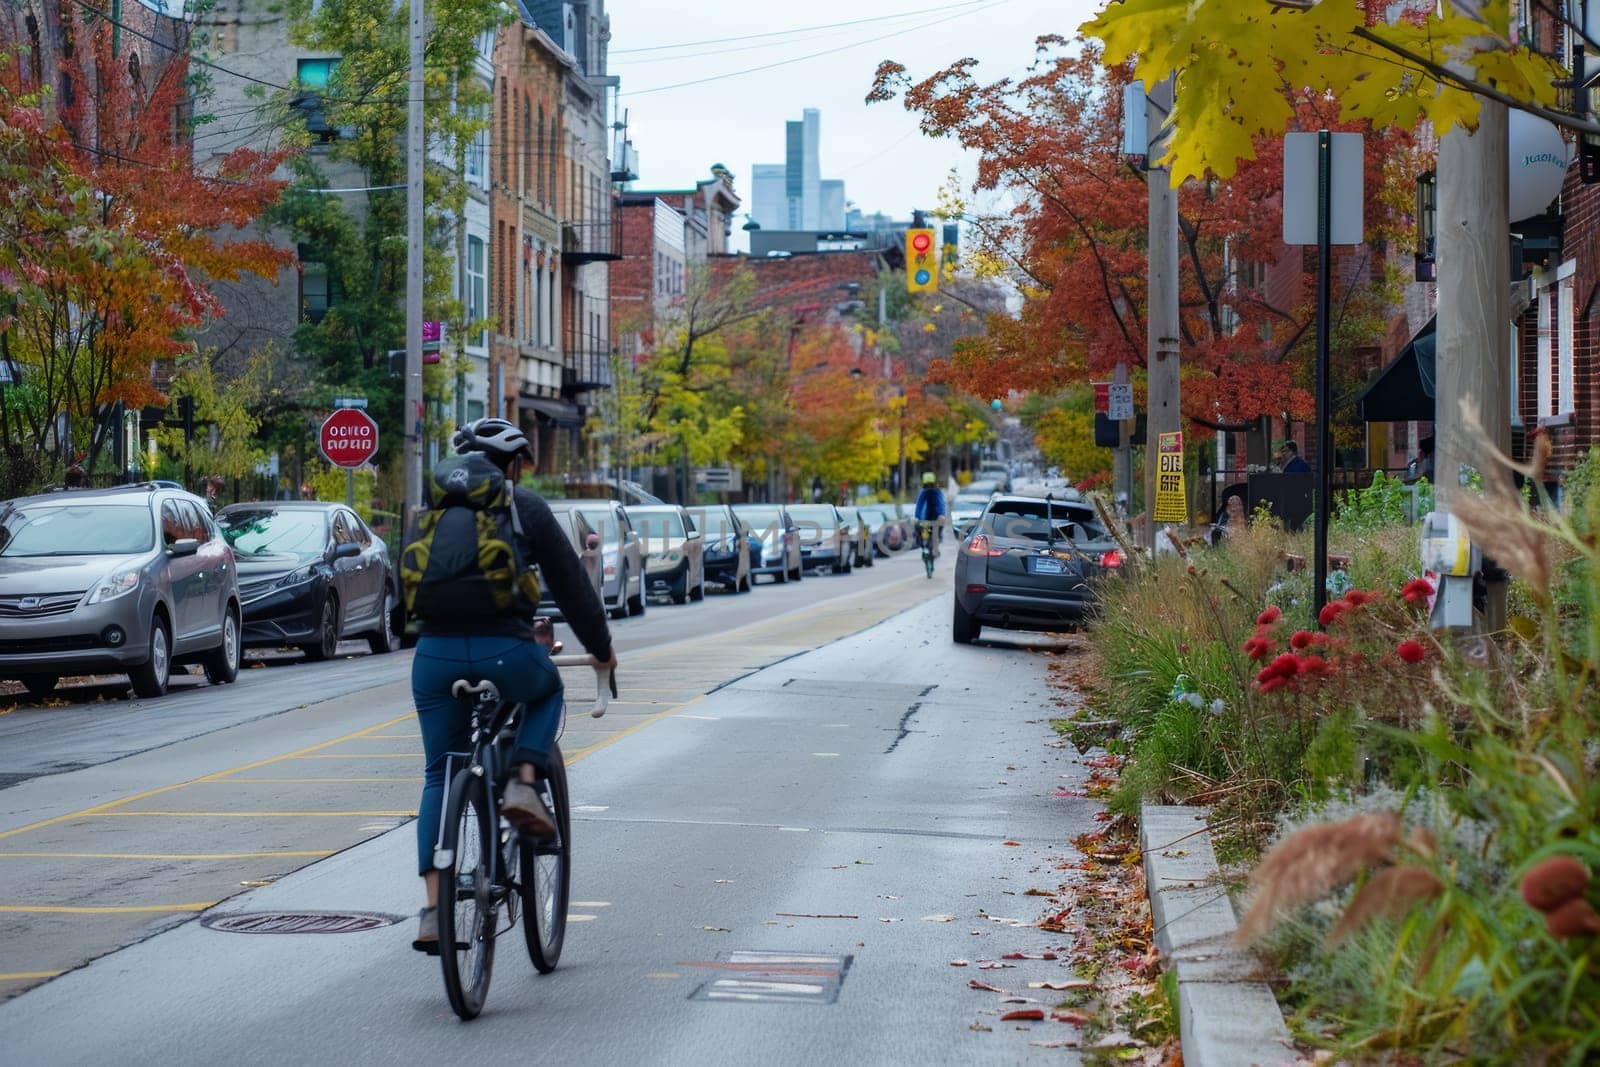 Urban Cyclist in Bike Lane by andreyz